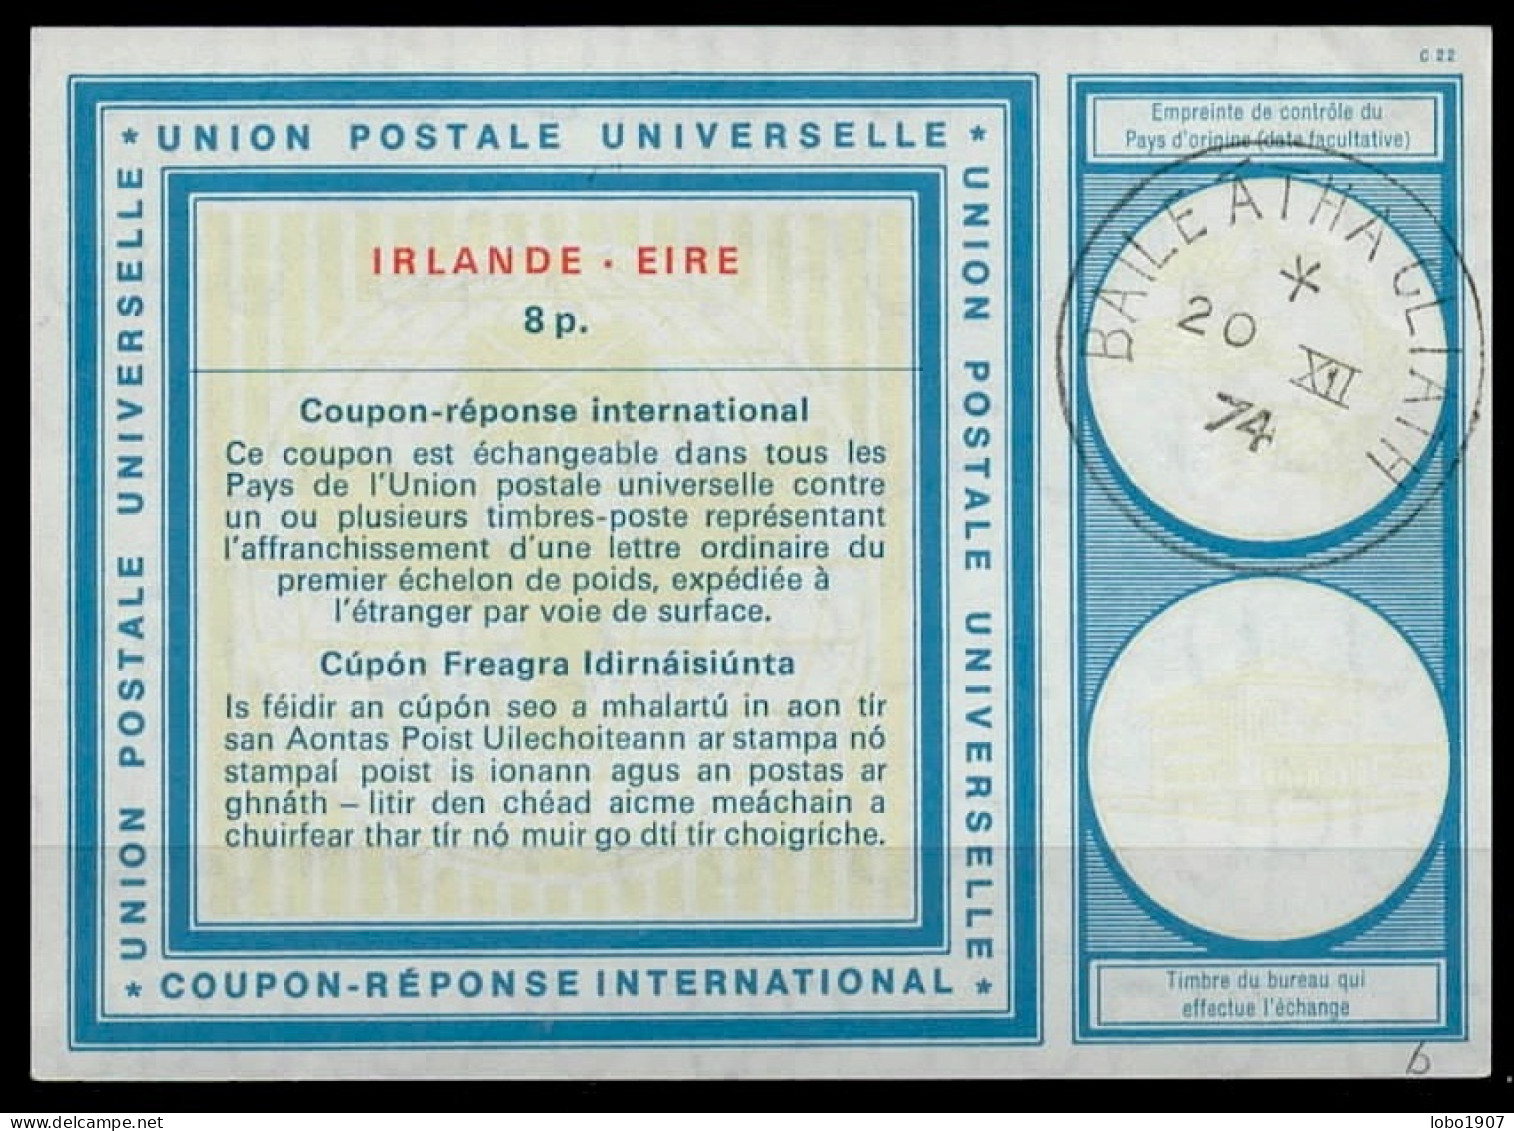 IRLANDE IRELAND ÉIRE  Vi21  8p. International Reply Coupon Reponse Antwortschein IRC IAS O B.A.C. 20.12.74 - Postal Stationery